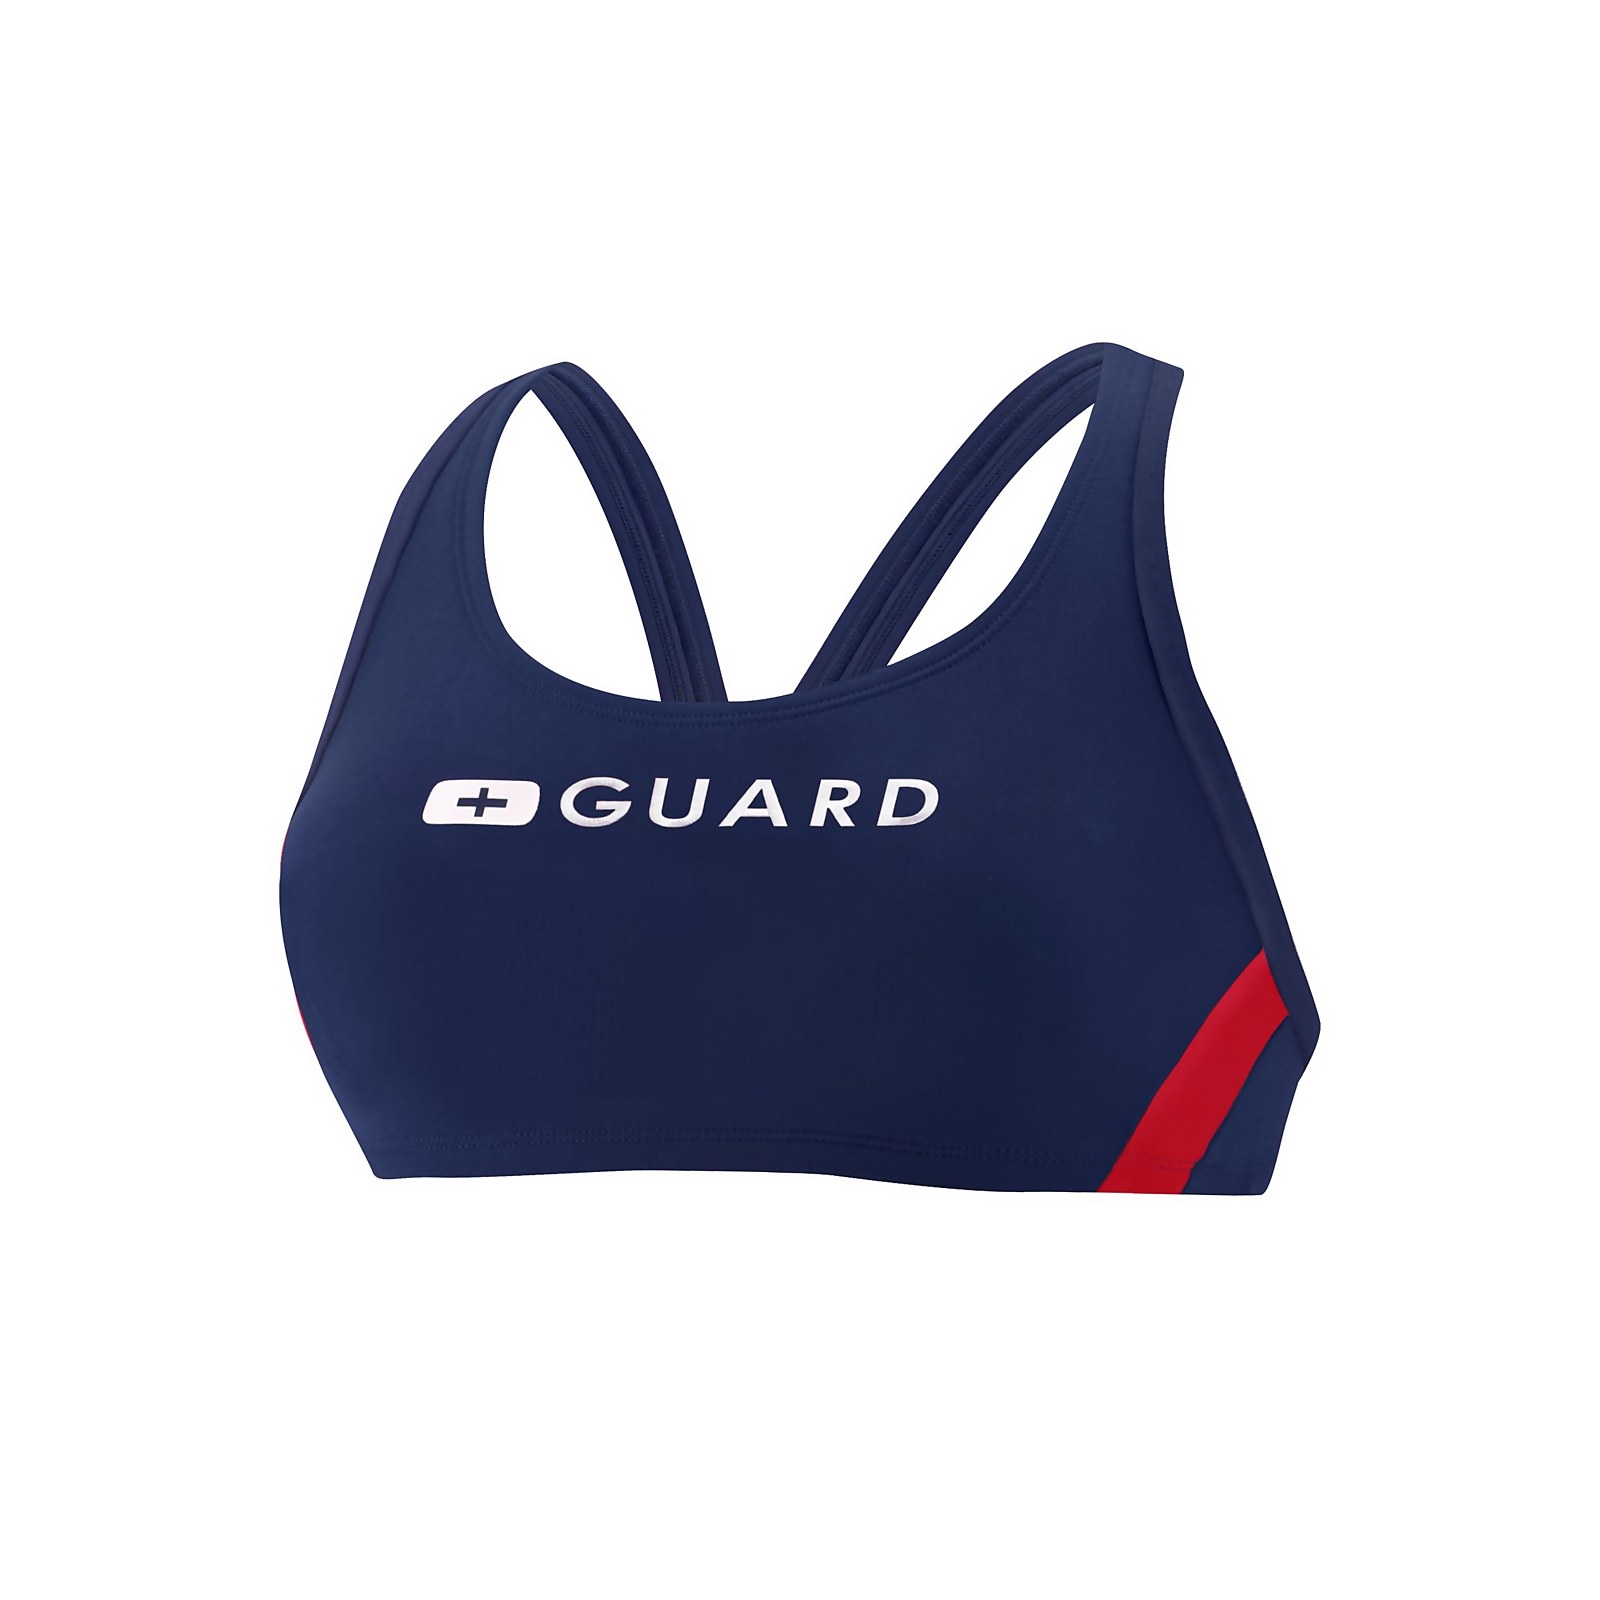 Speedo  Guard Sports Bra - S    : Navy